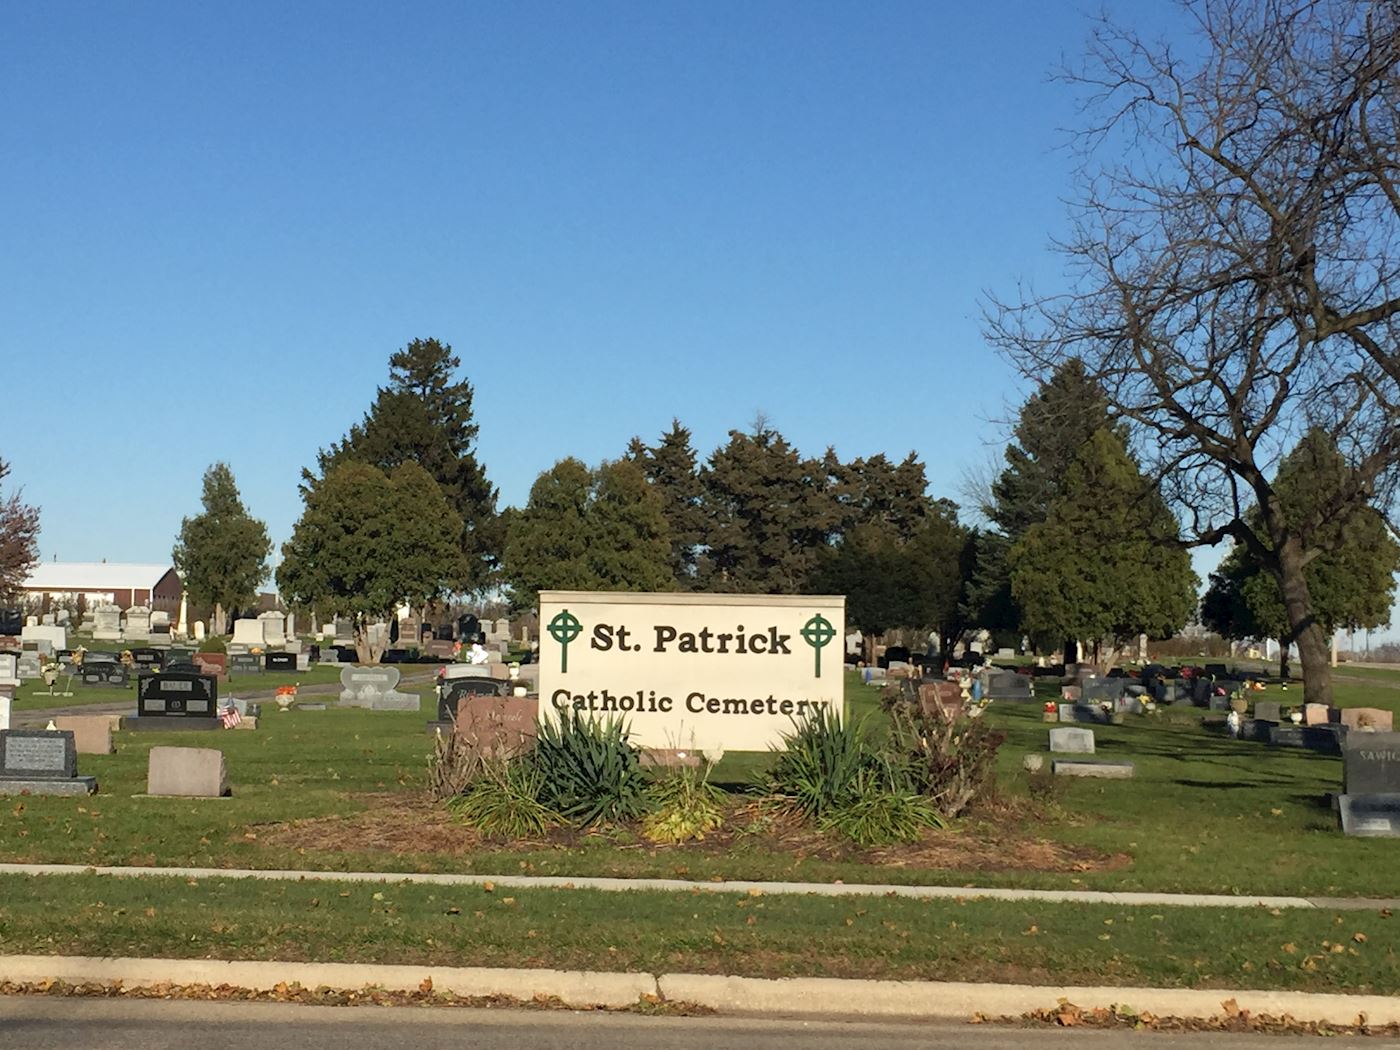 St. Patrick's Catholic Cemetery